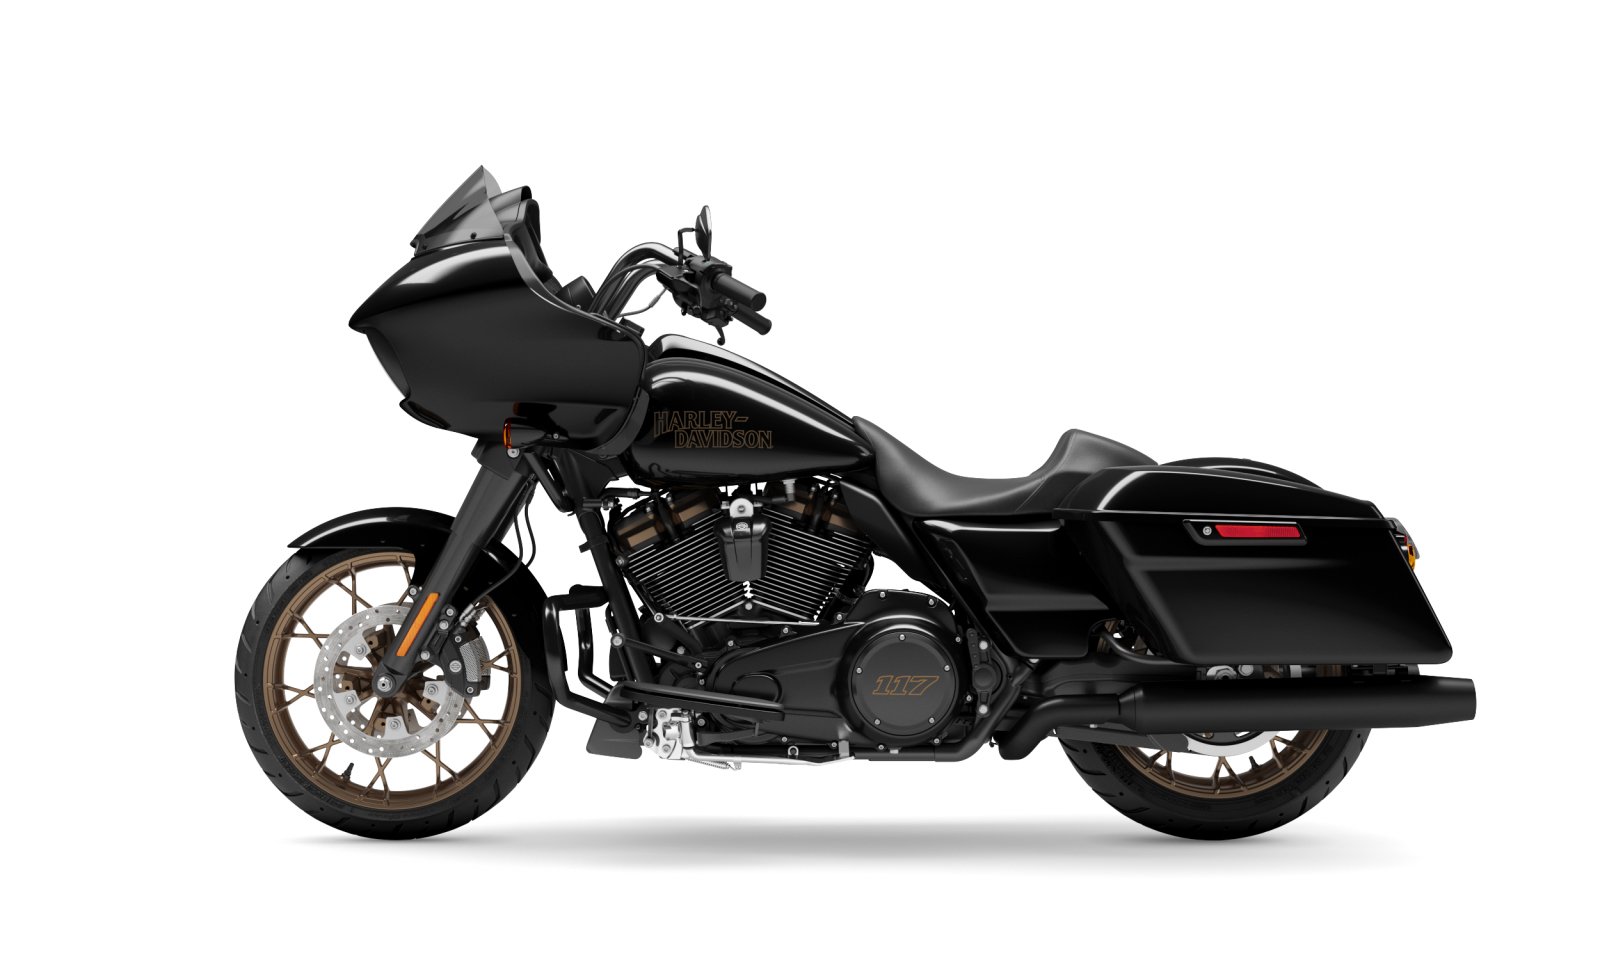 2023 Harley-Davidson CVO Street Glide price, CVO Road Glide price